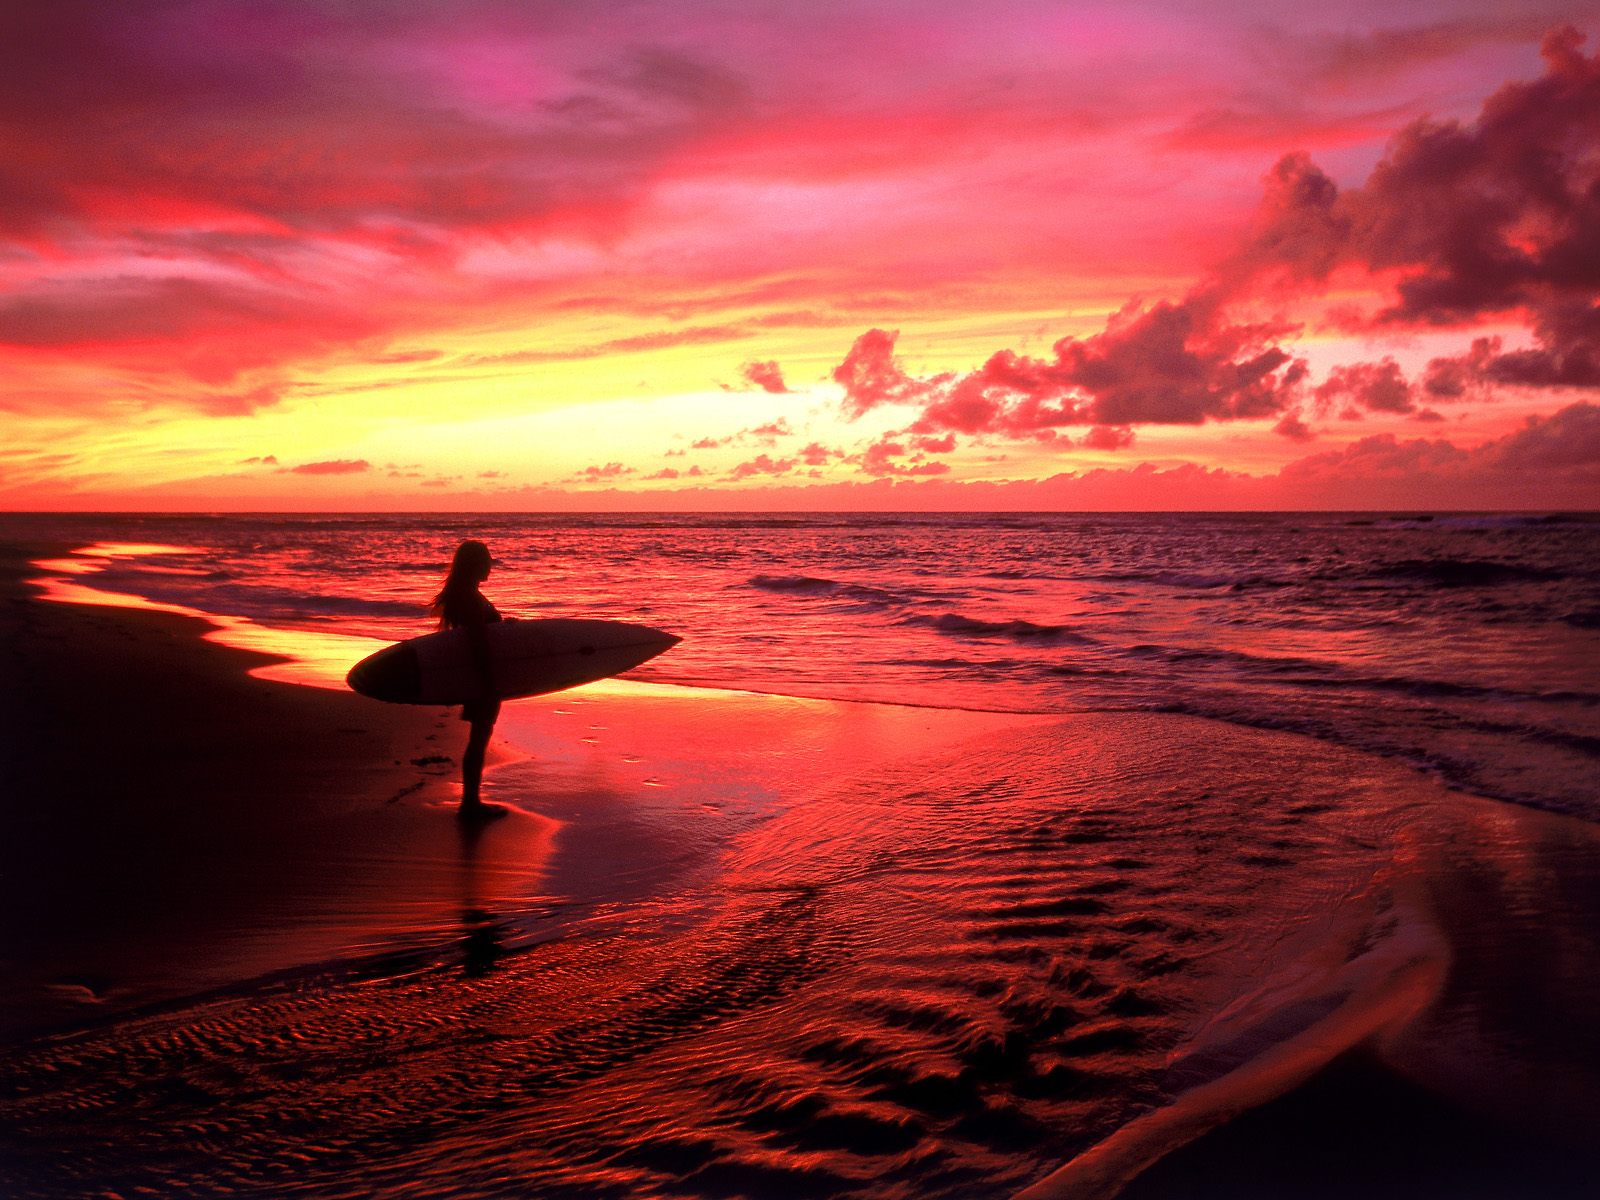 hawaii surfer